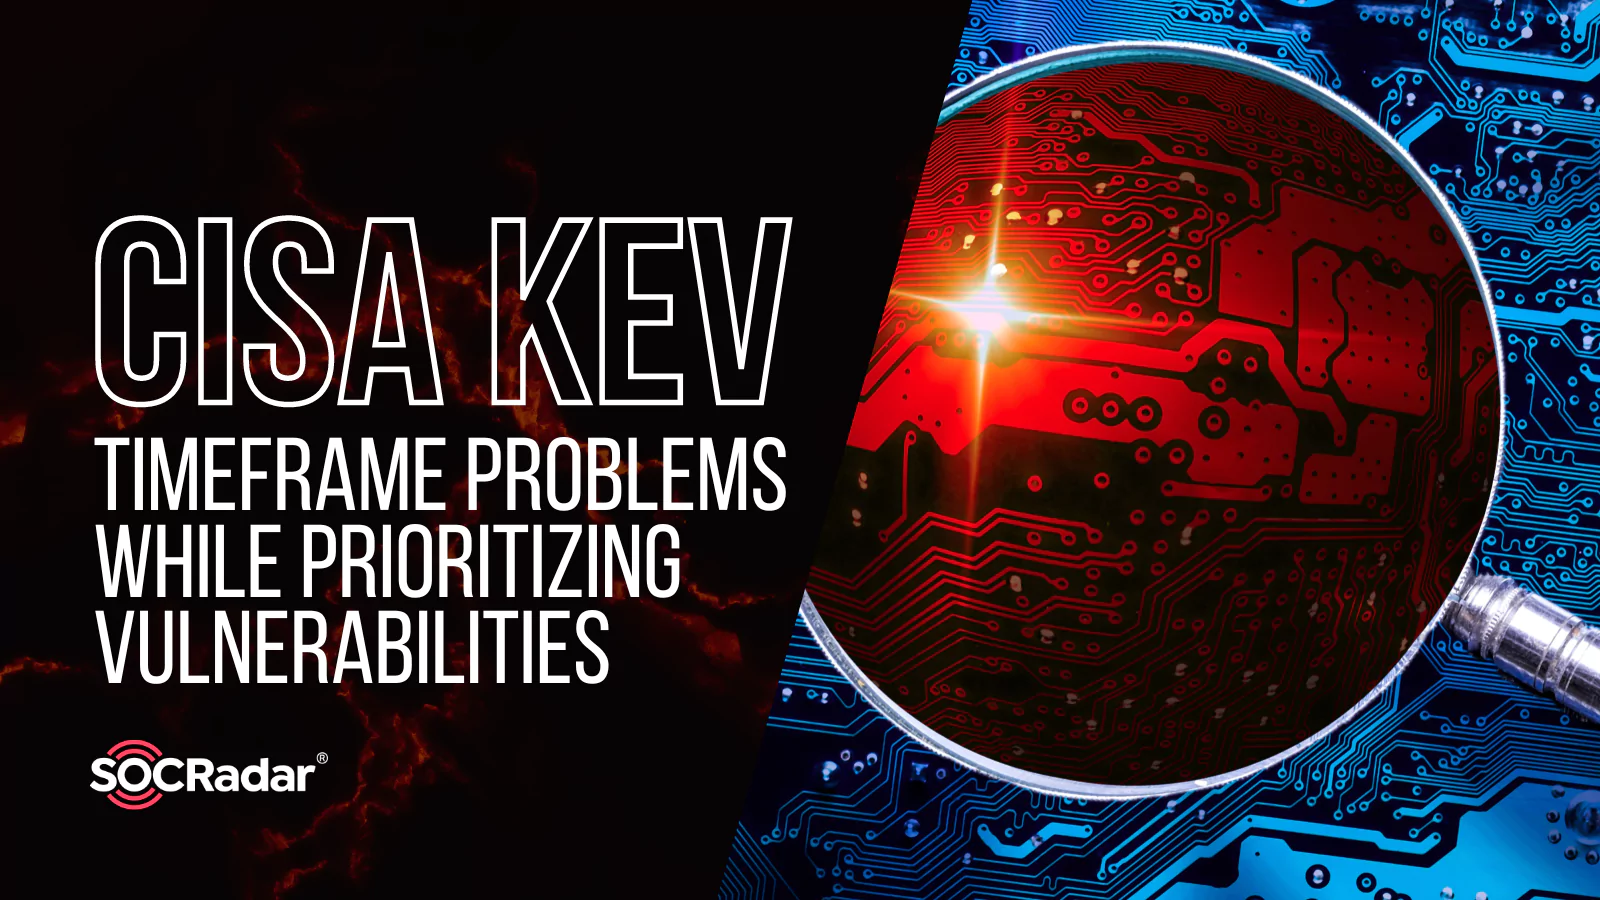 SOCRadar® Cyber Intelligence Inc. | CISA KEV Timeframe Problems While Prioritizing Vulnerabilities